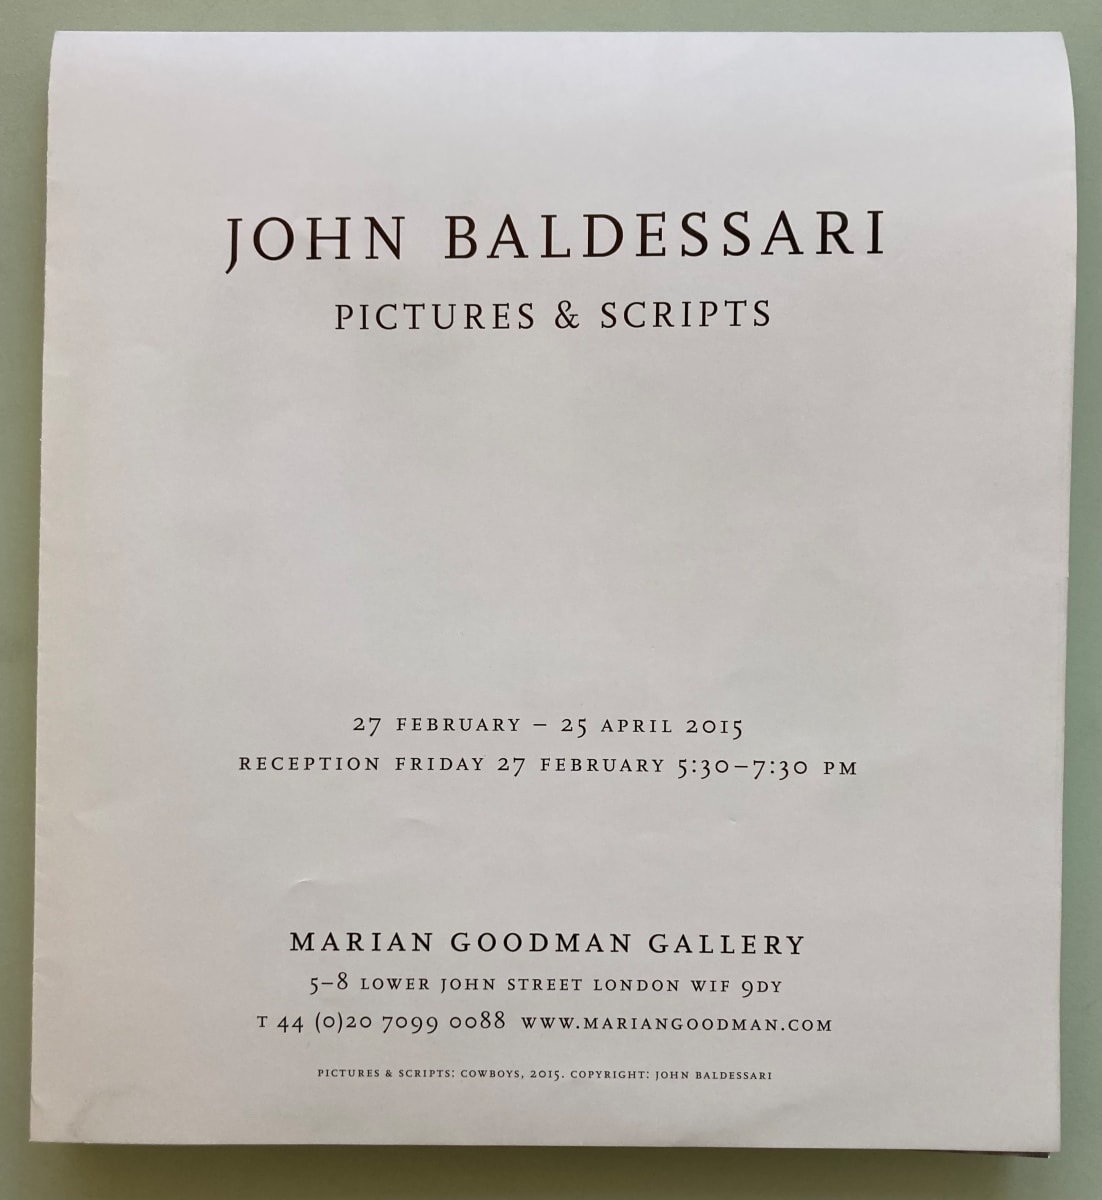 Pictures & Scripts announcement poster by John Baldessari 